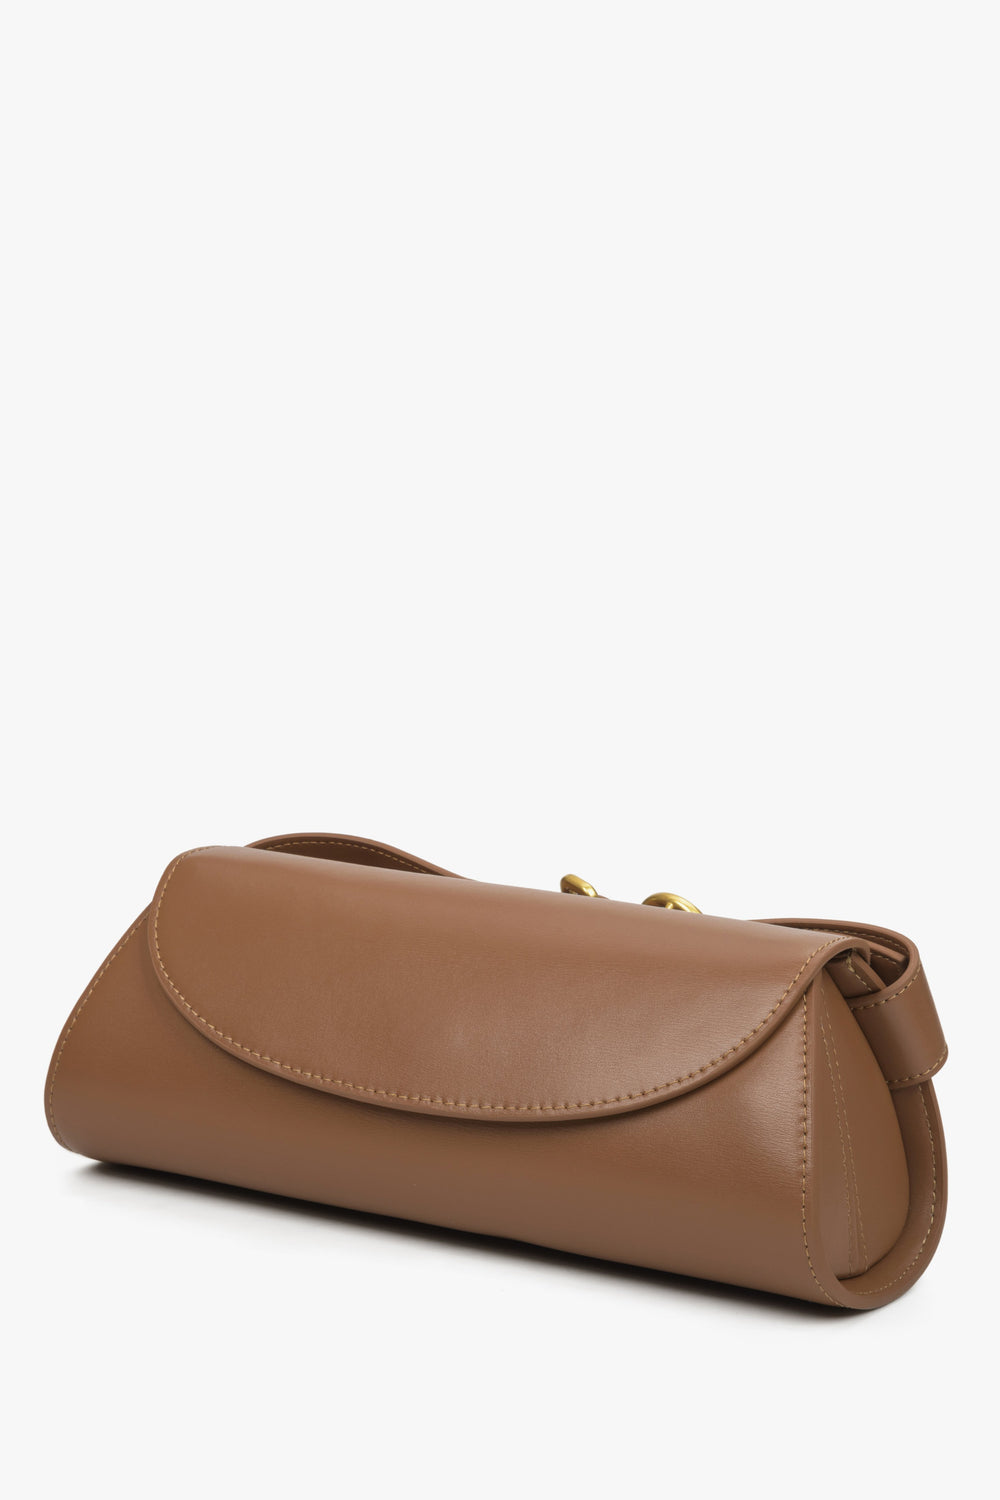 Women's Brown Leather Handbag with Oblong Shape Estro ER00114409.